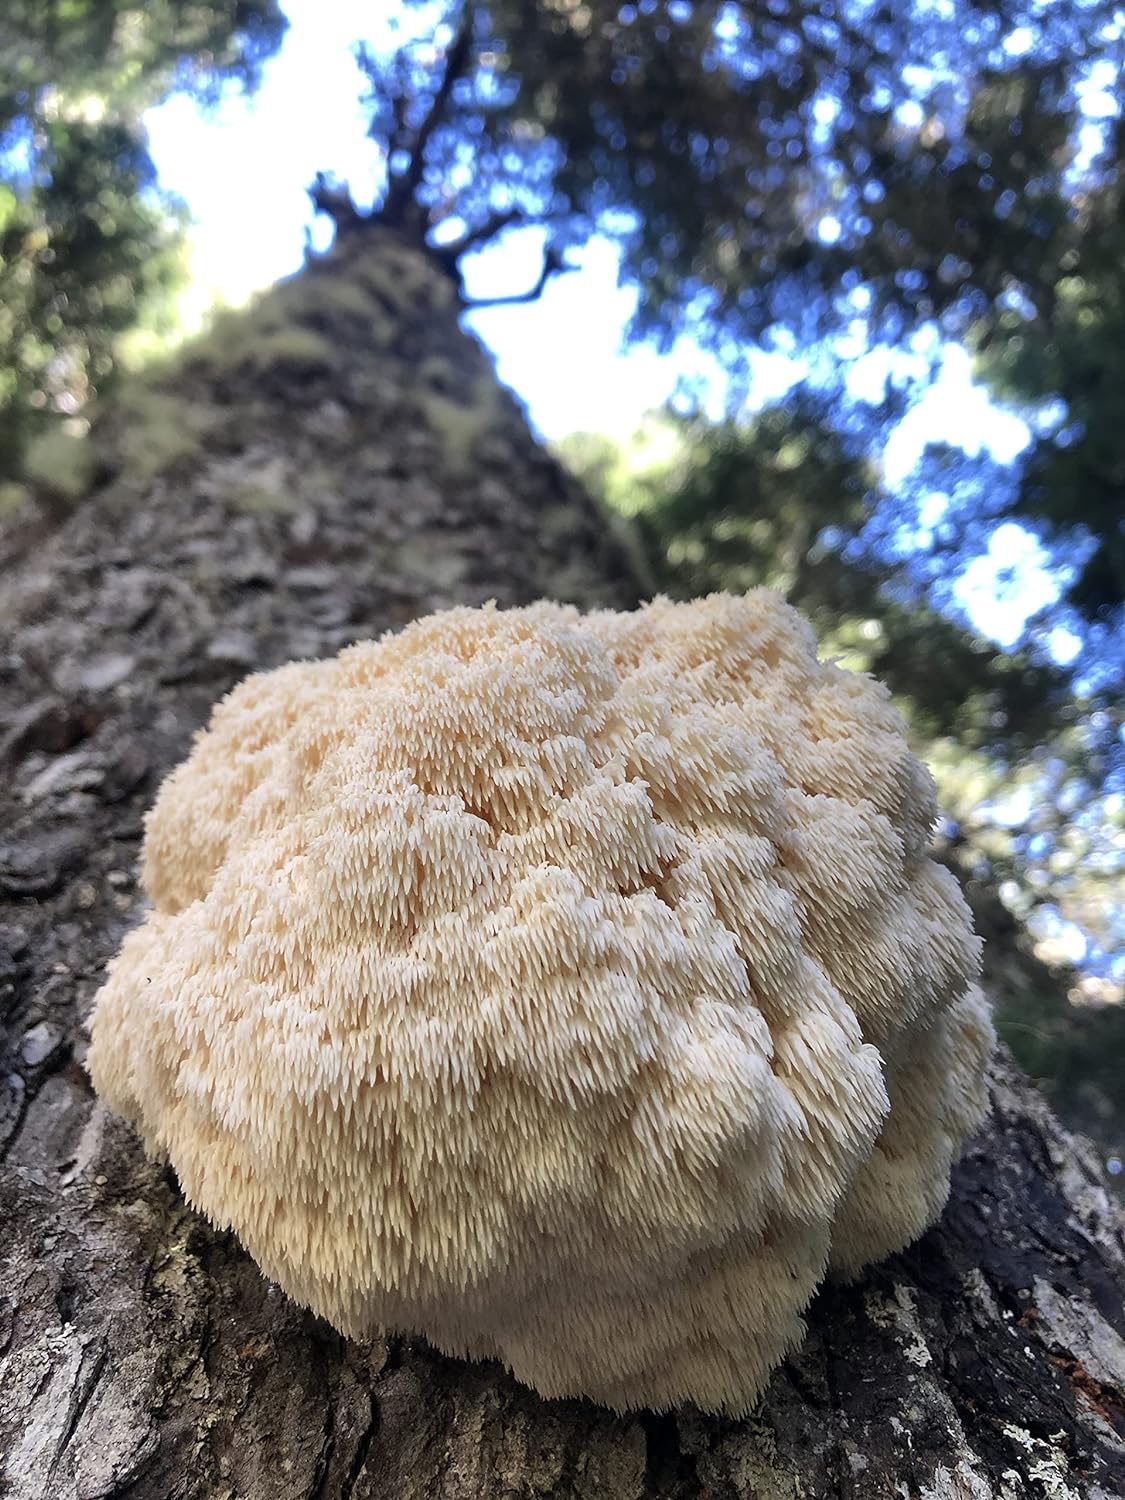 Wilderness Poets Organic Lion's Mane Mushroom Powder - California Grown 99g